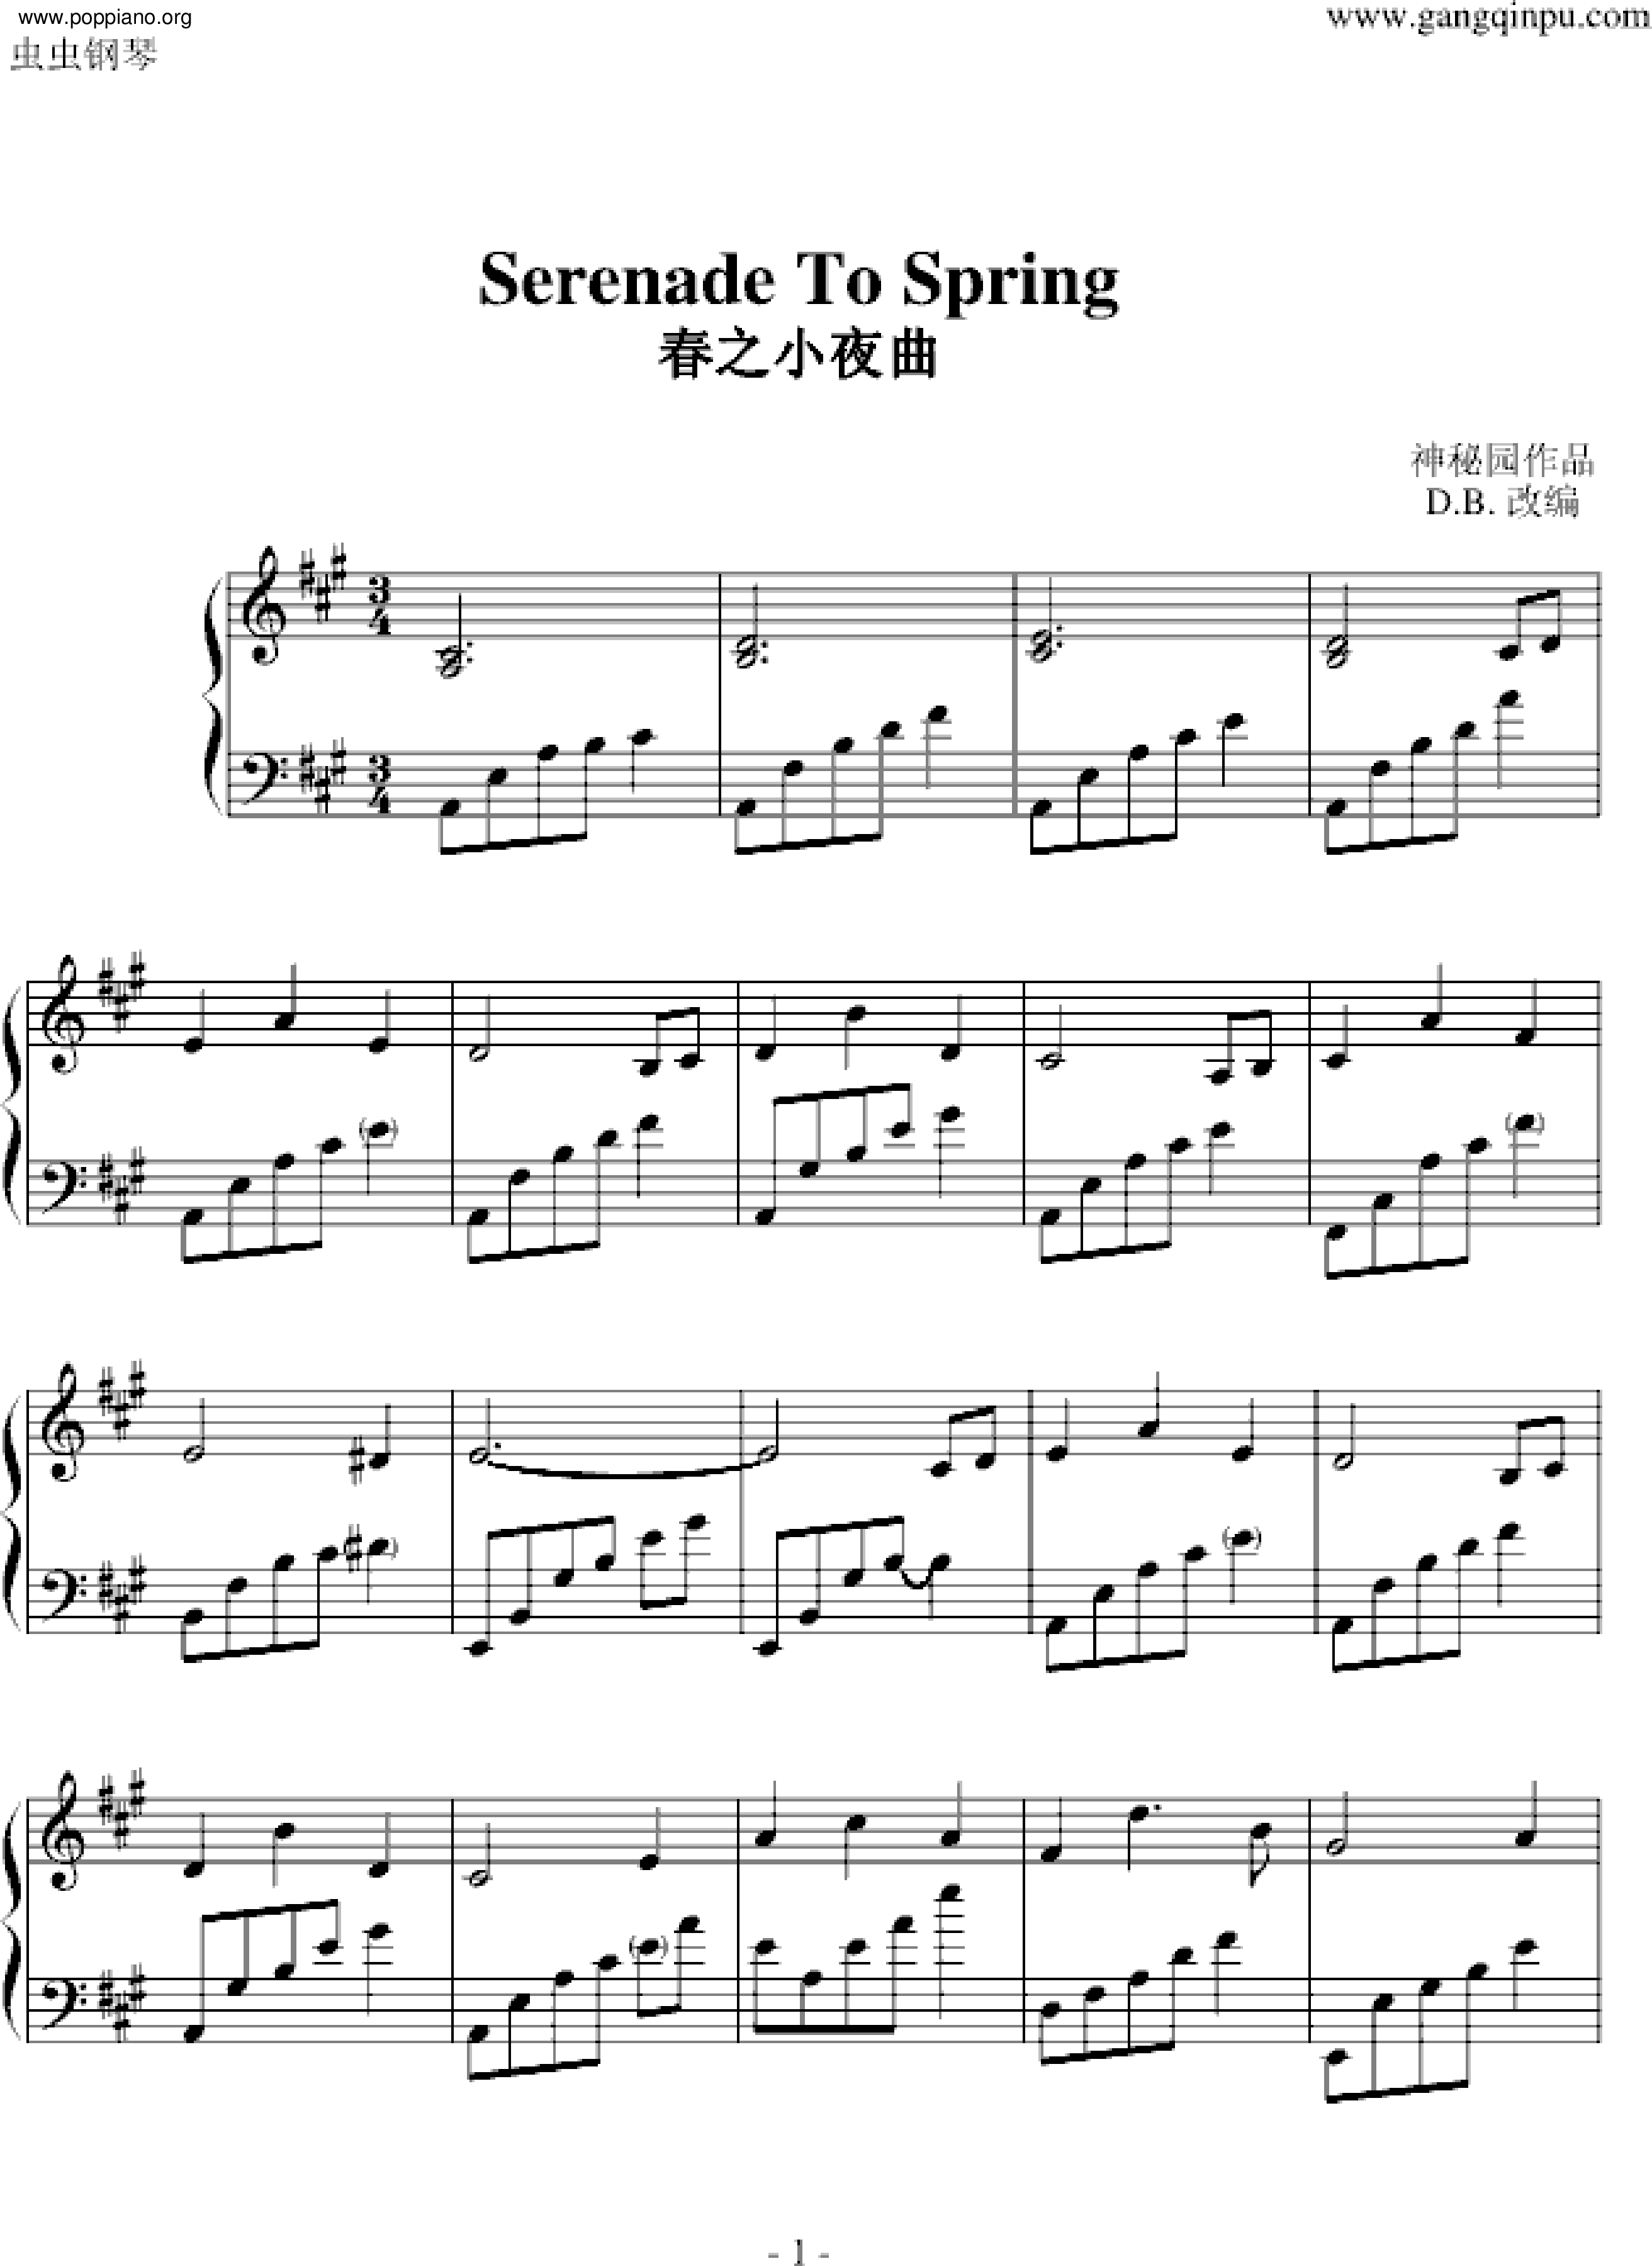 Serenade Of Spring Score